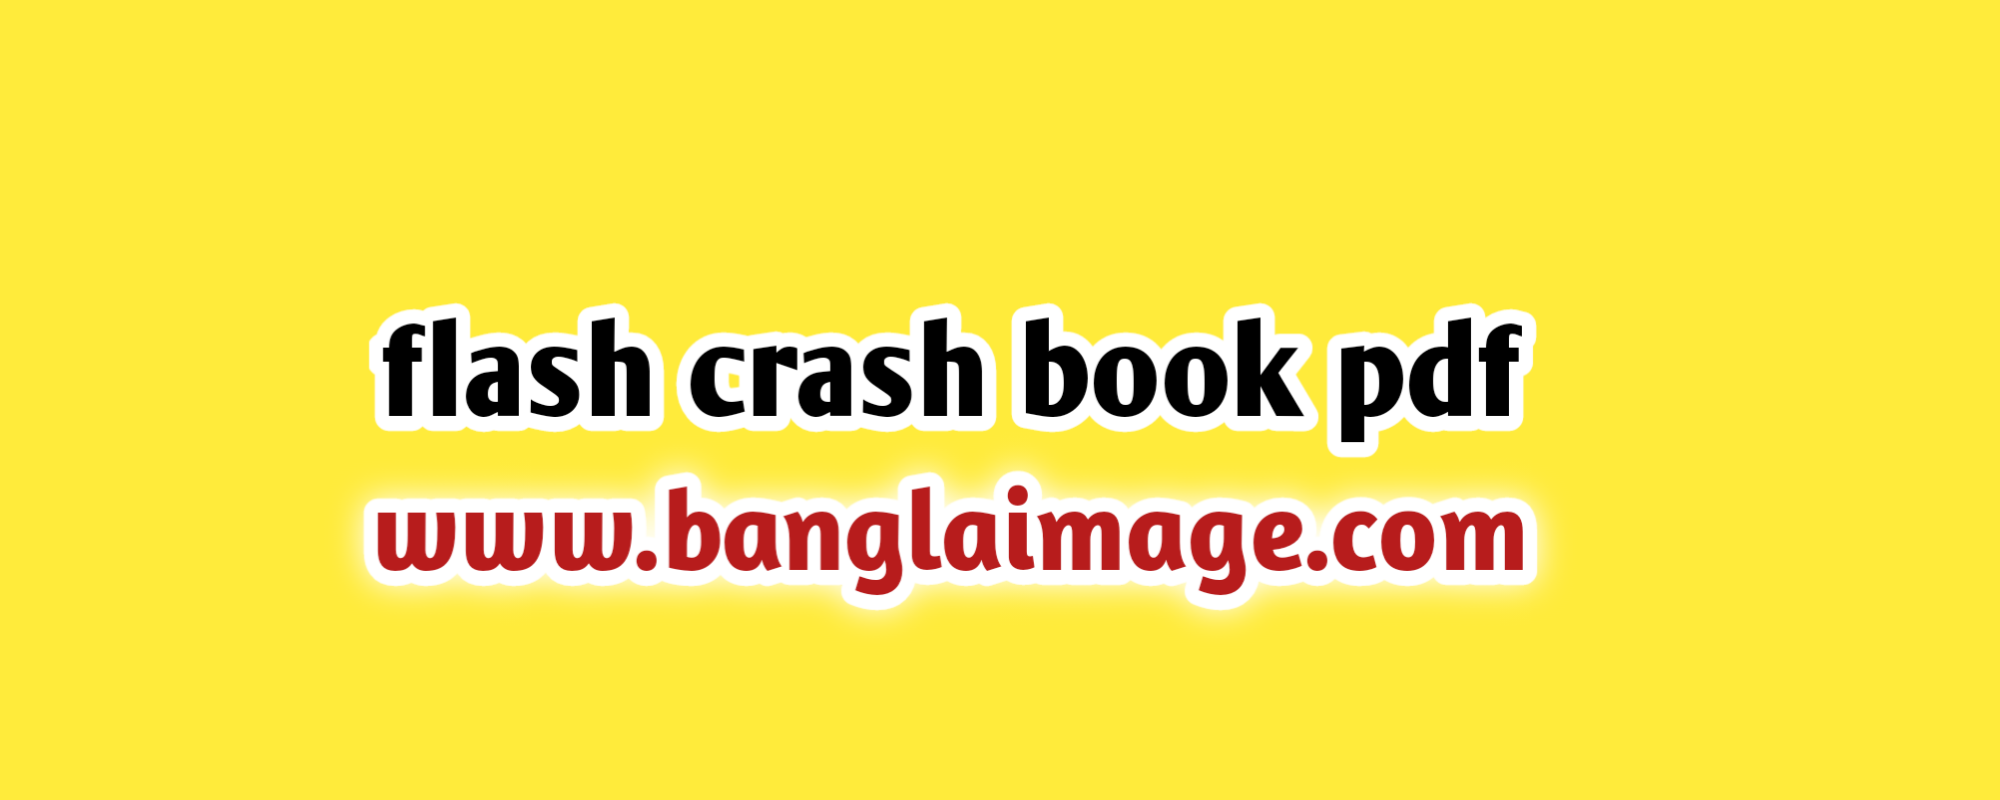 flash crash book pdf, flash crash book pdf online, flash crash book pdf free, the flash crash book pdf online